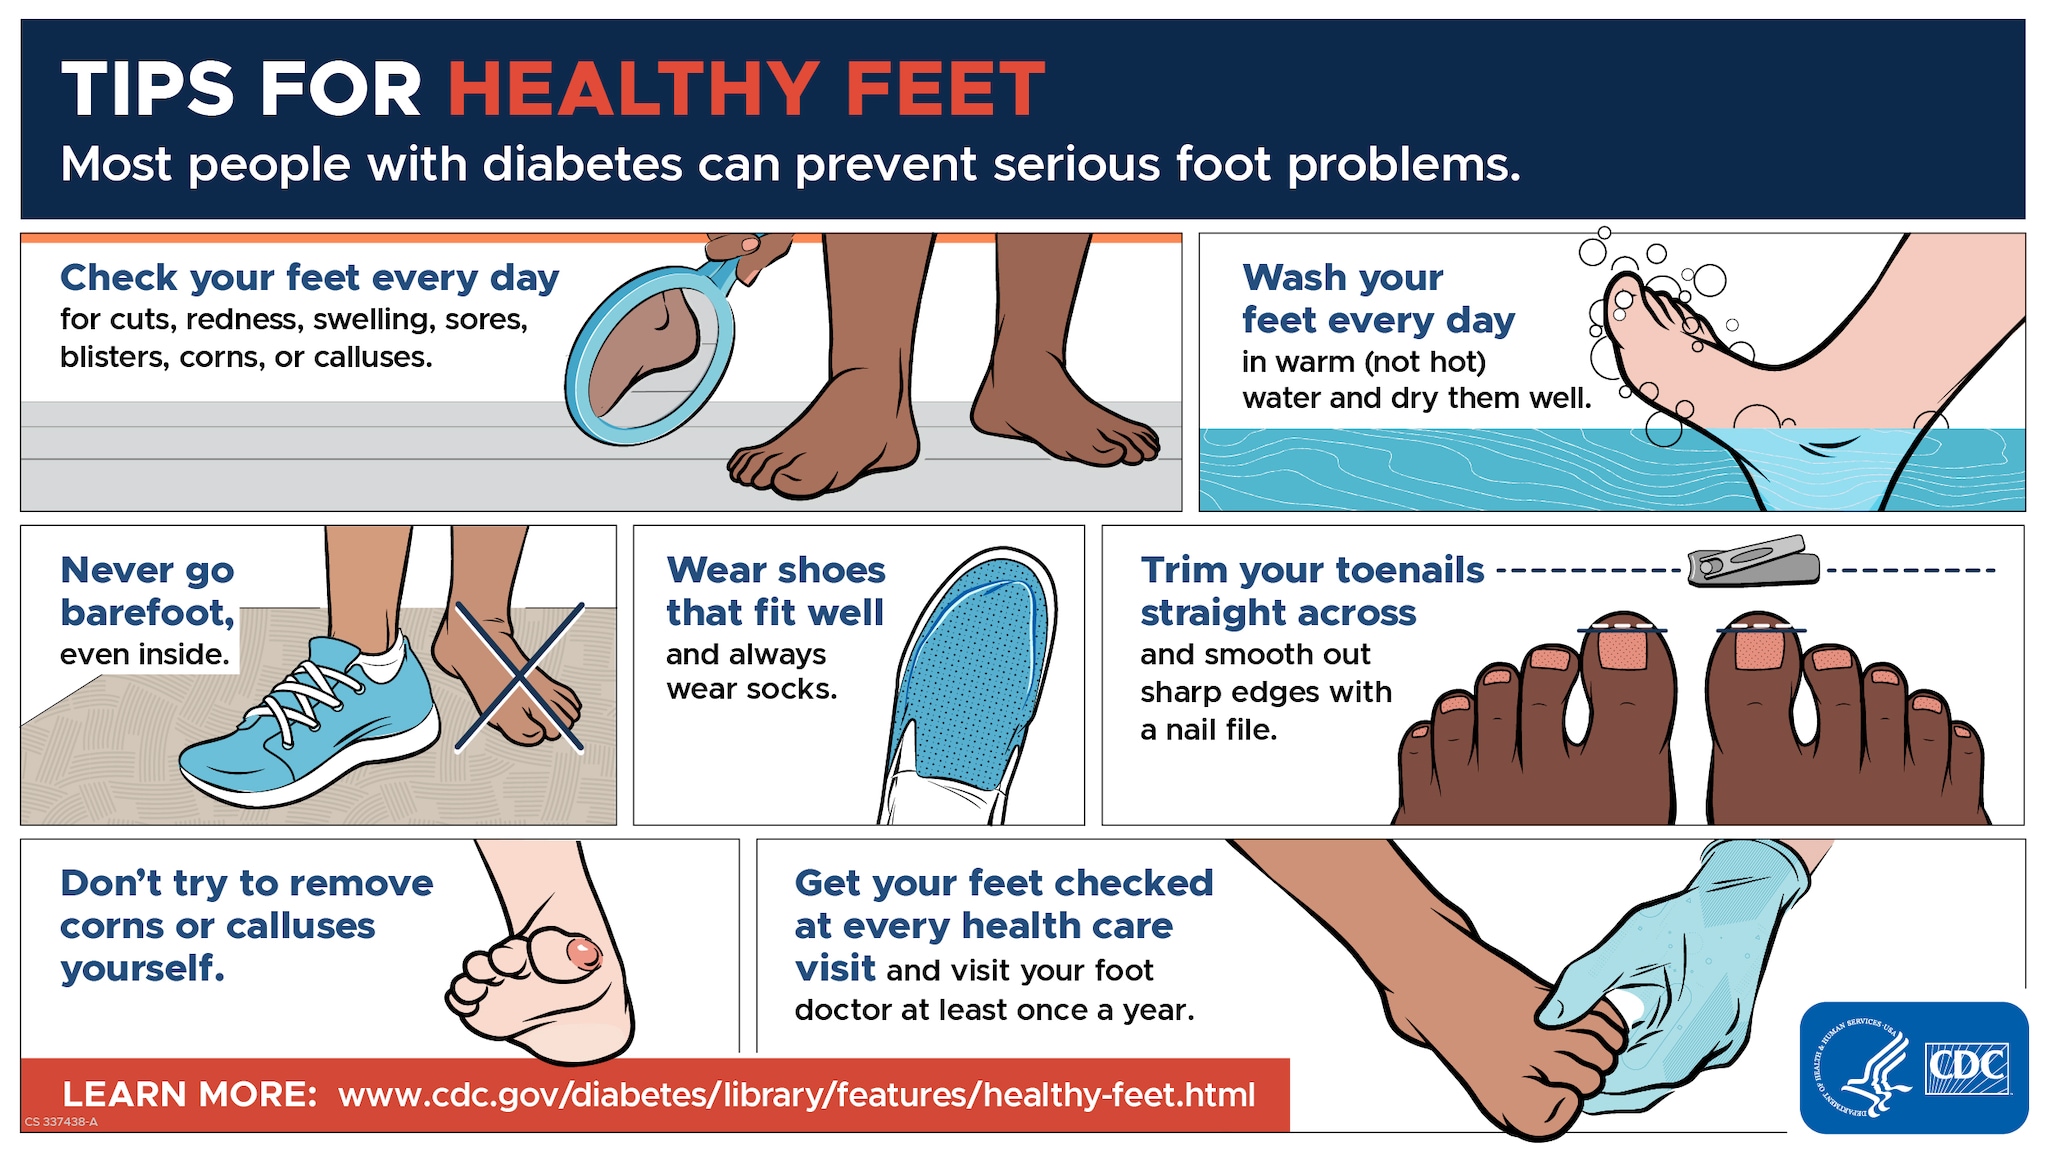 Diabetic foot hygiene